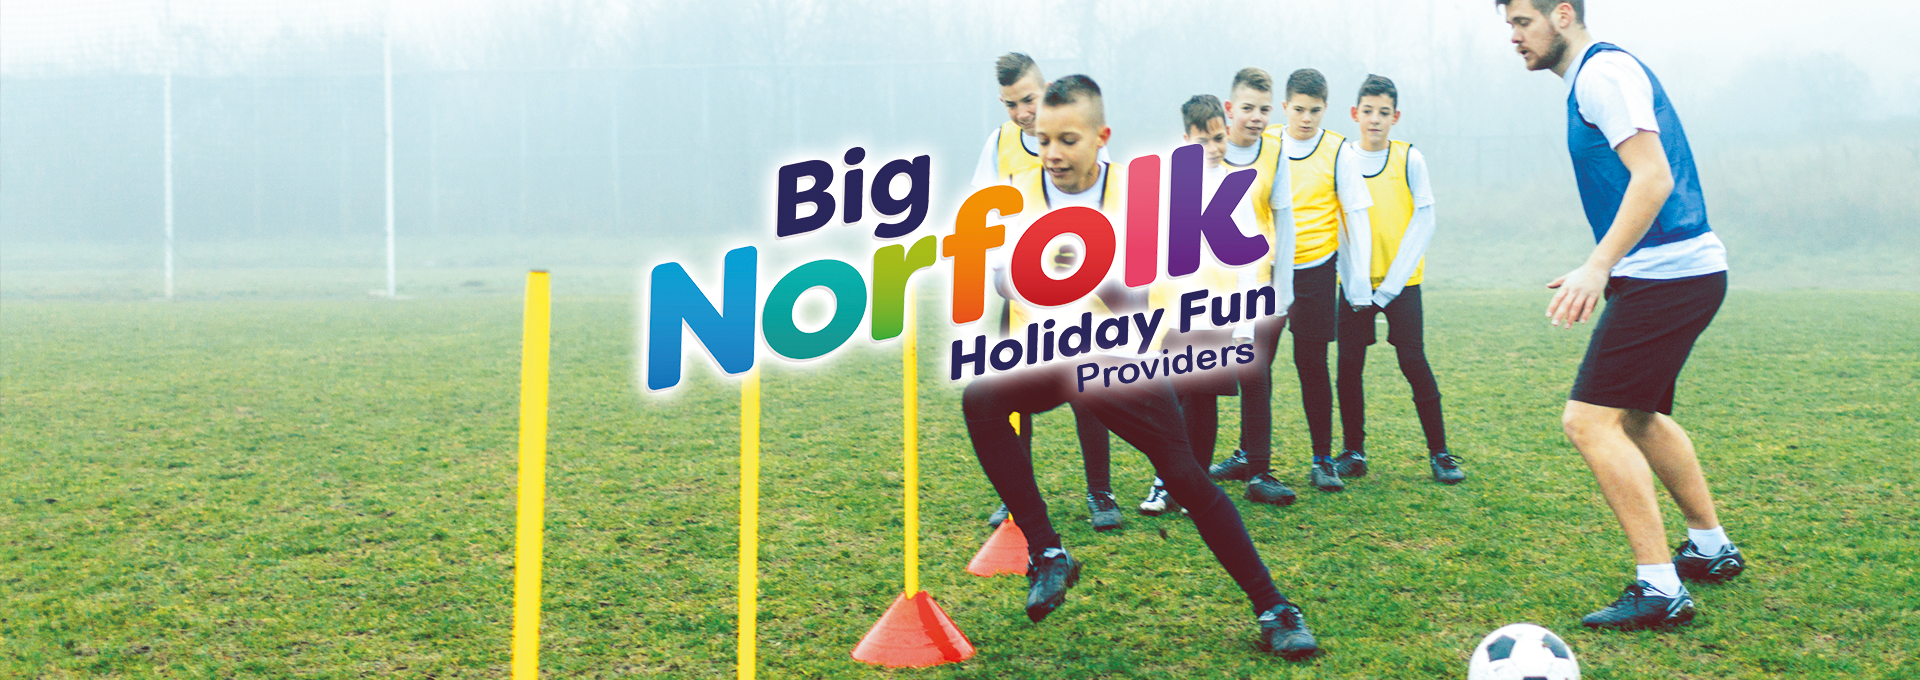 Big Norfolk Holiday Fun Providers